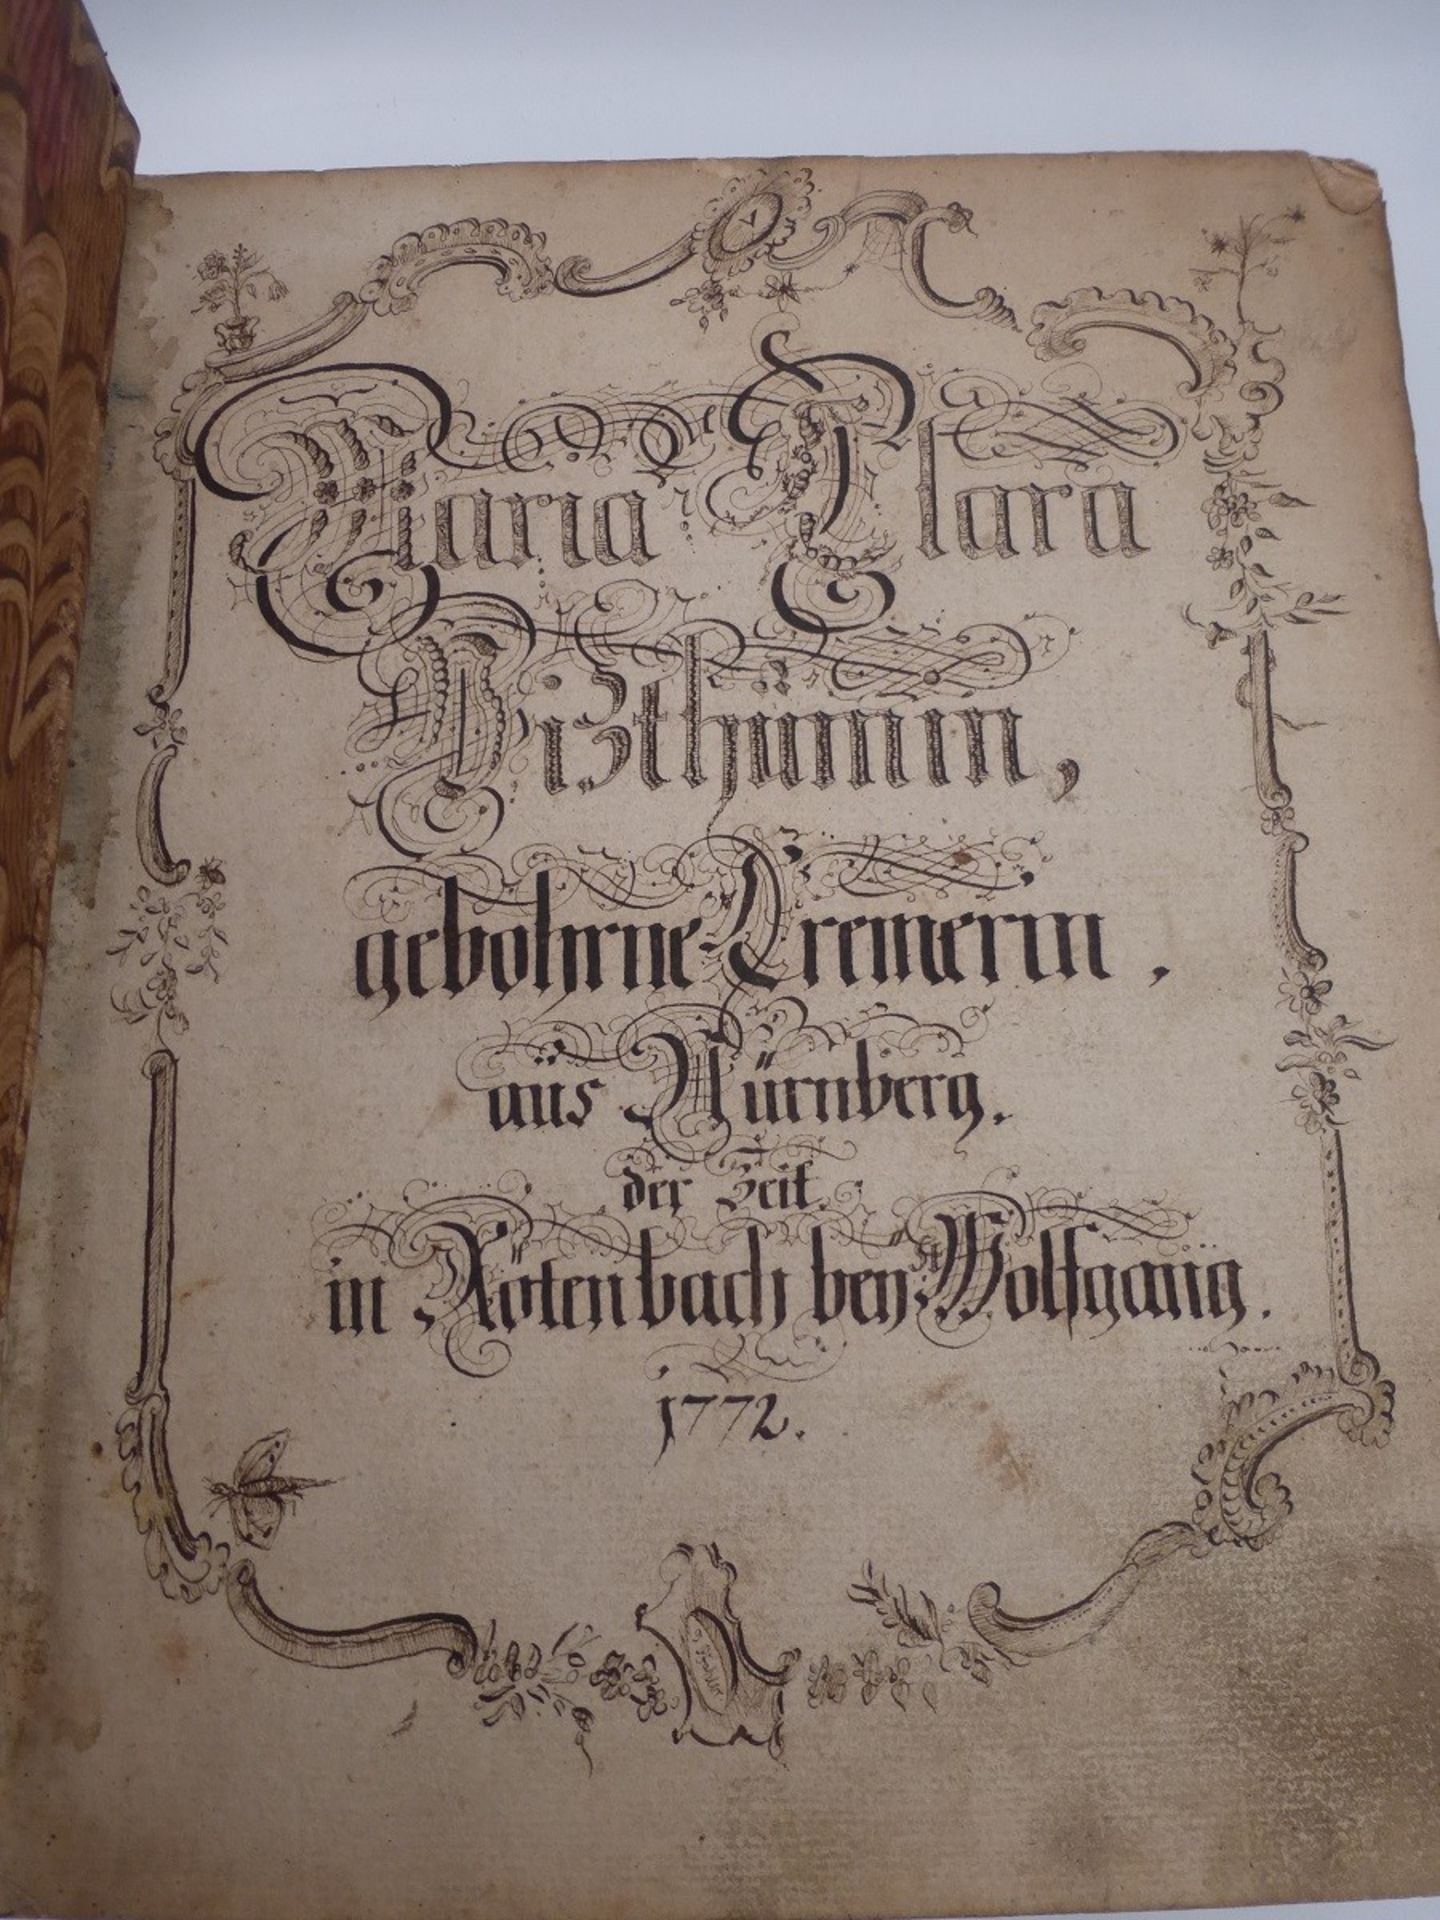 Biblia Germanica - Nürnberg / Schwabach 1702 - Image 2 of 4